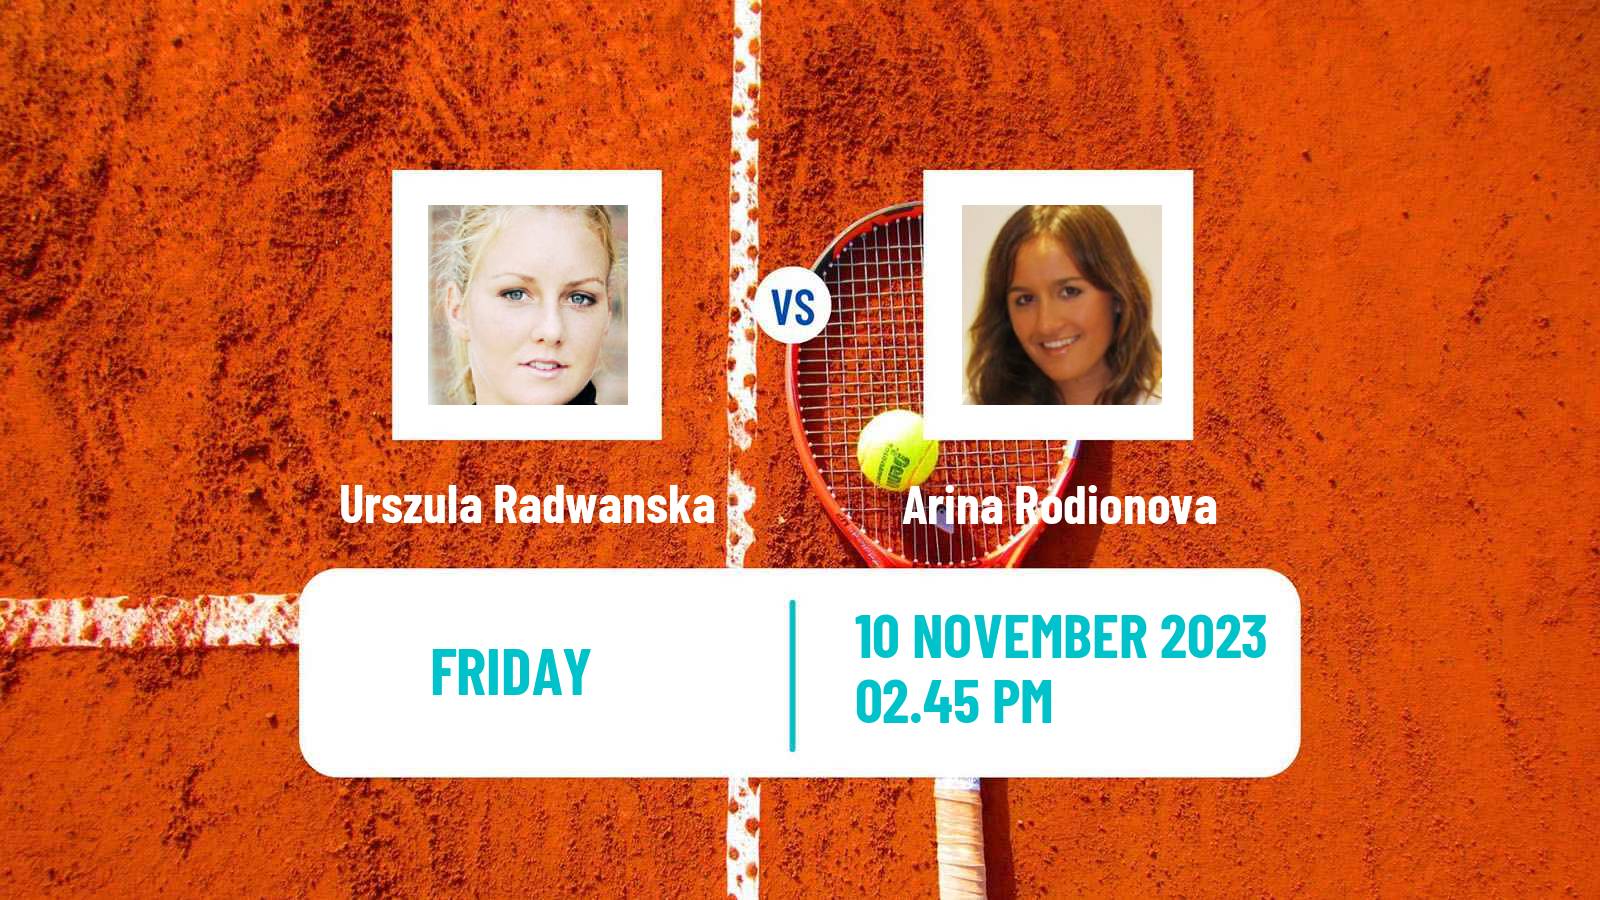 Tennis ITF W60 H Calgary Women Urszula Radwanska - Arina Rodionova